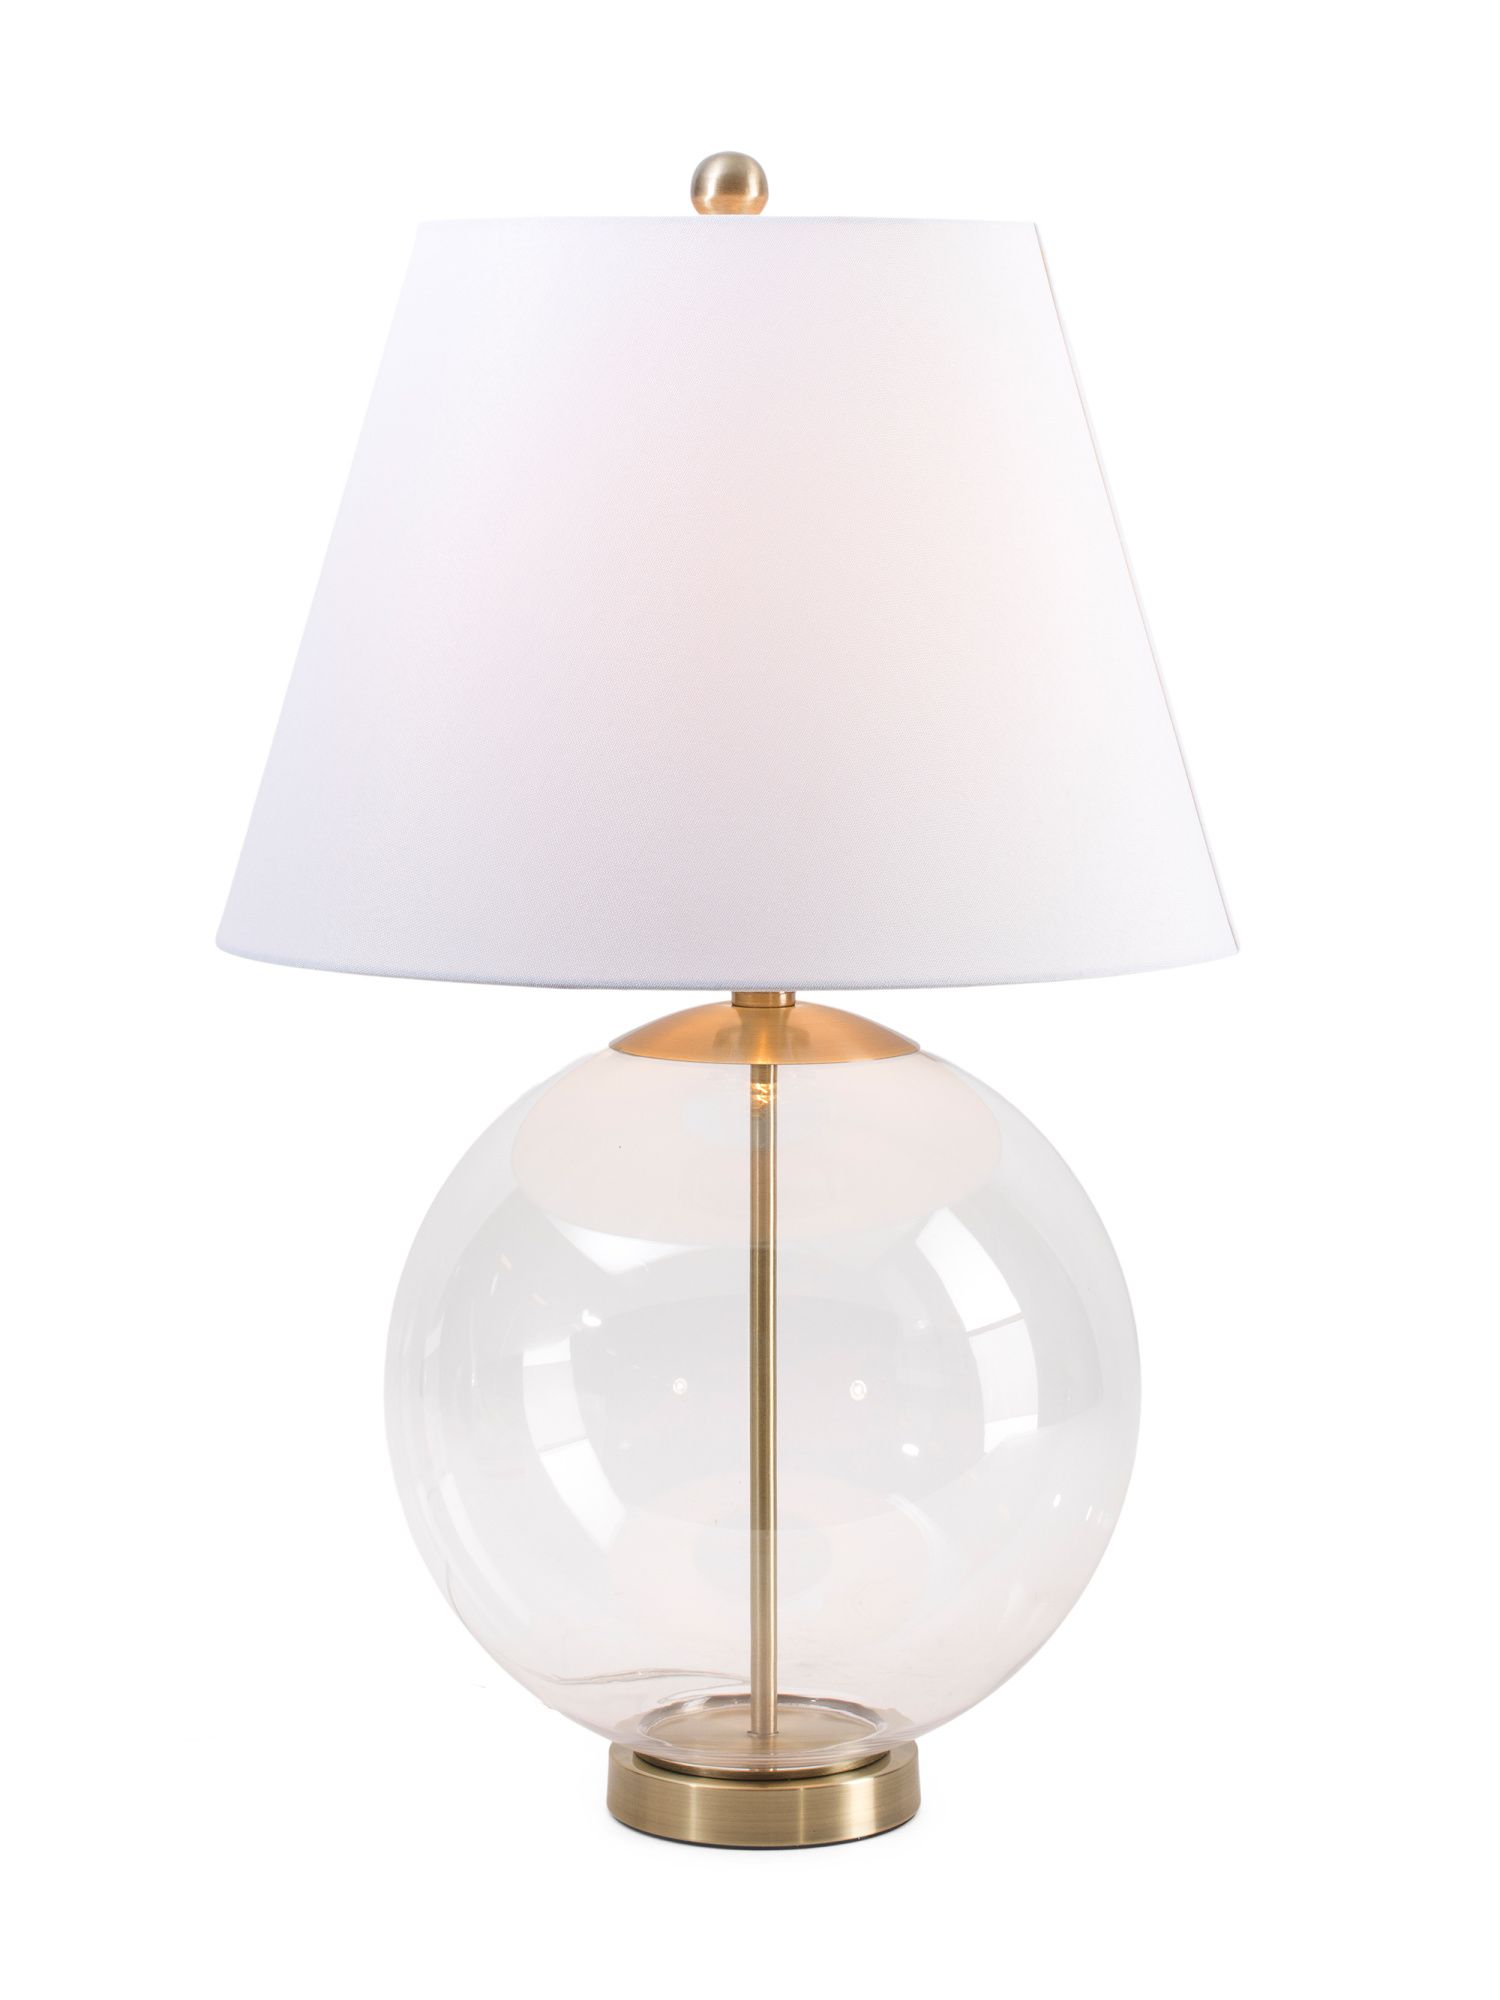 Glass Table Lamp | TJ Maxx